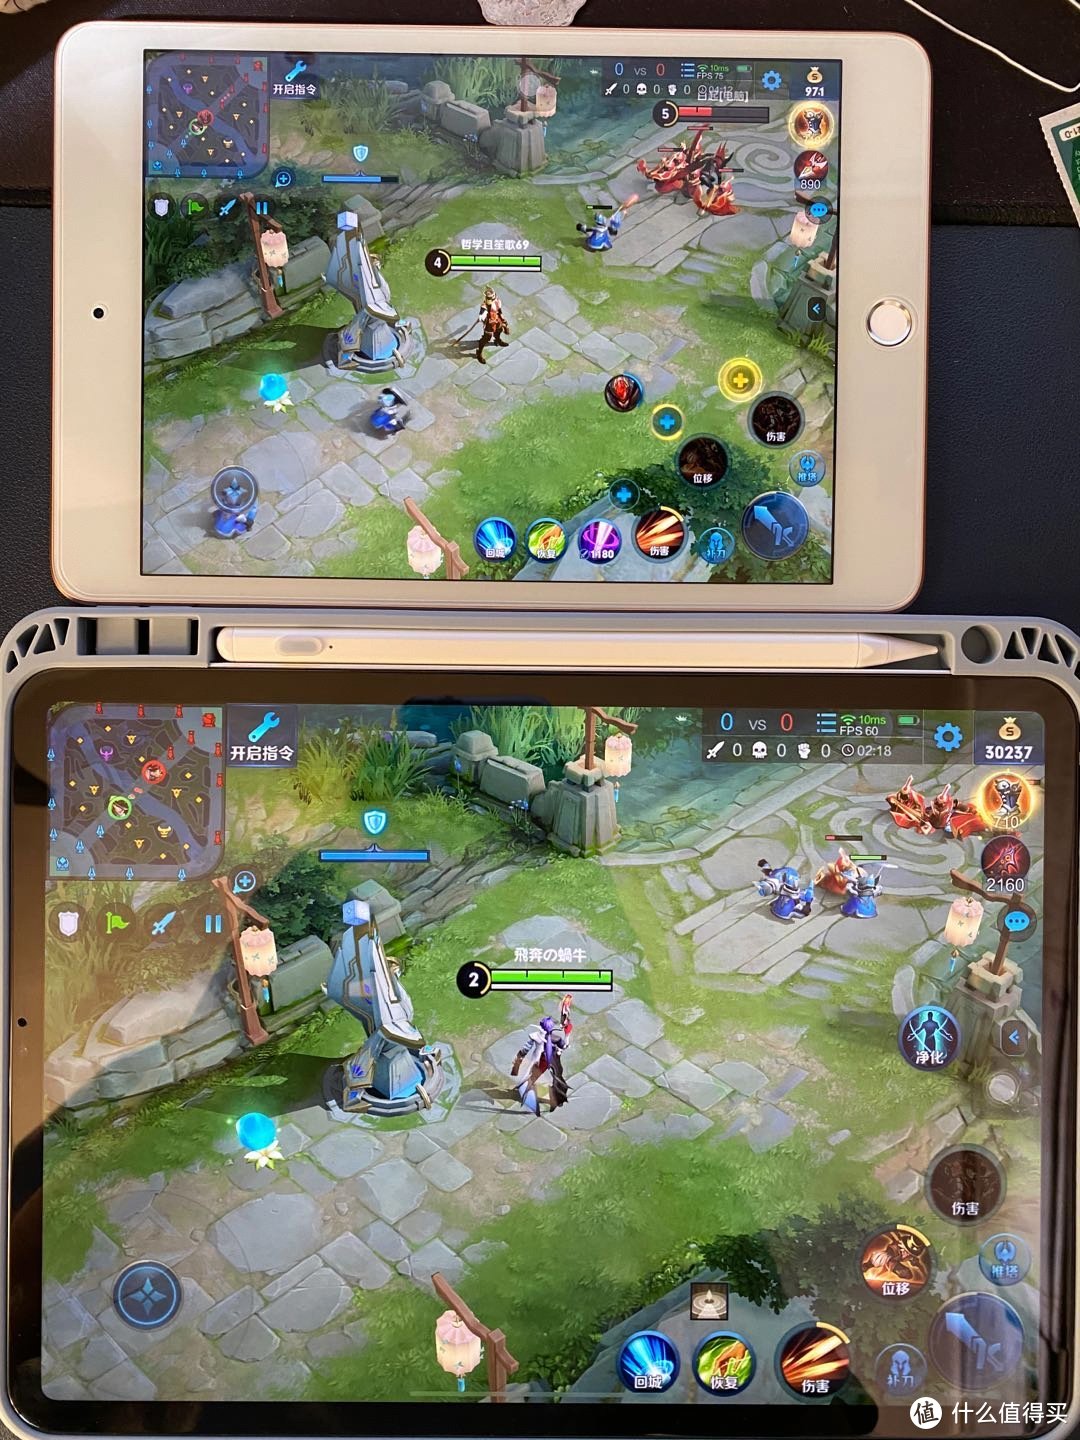 iPad Pro 11寸 2020 vs iPad Mini 5游戏体验&购买建议